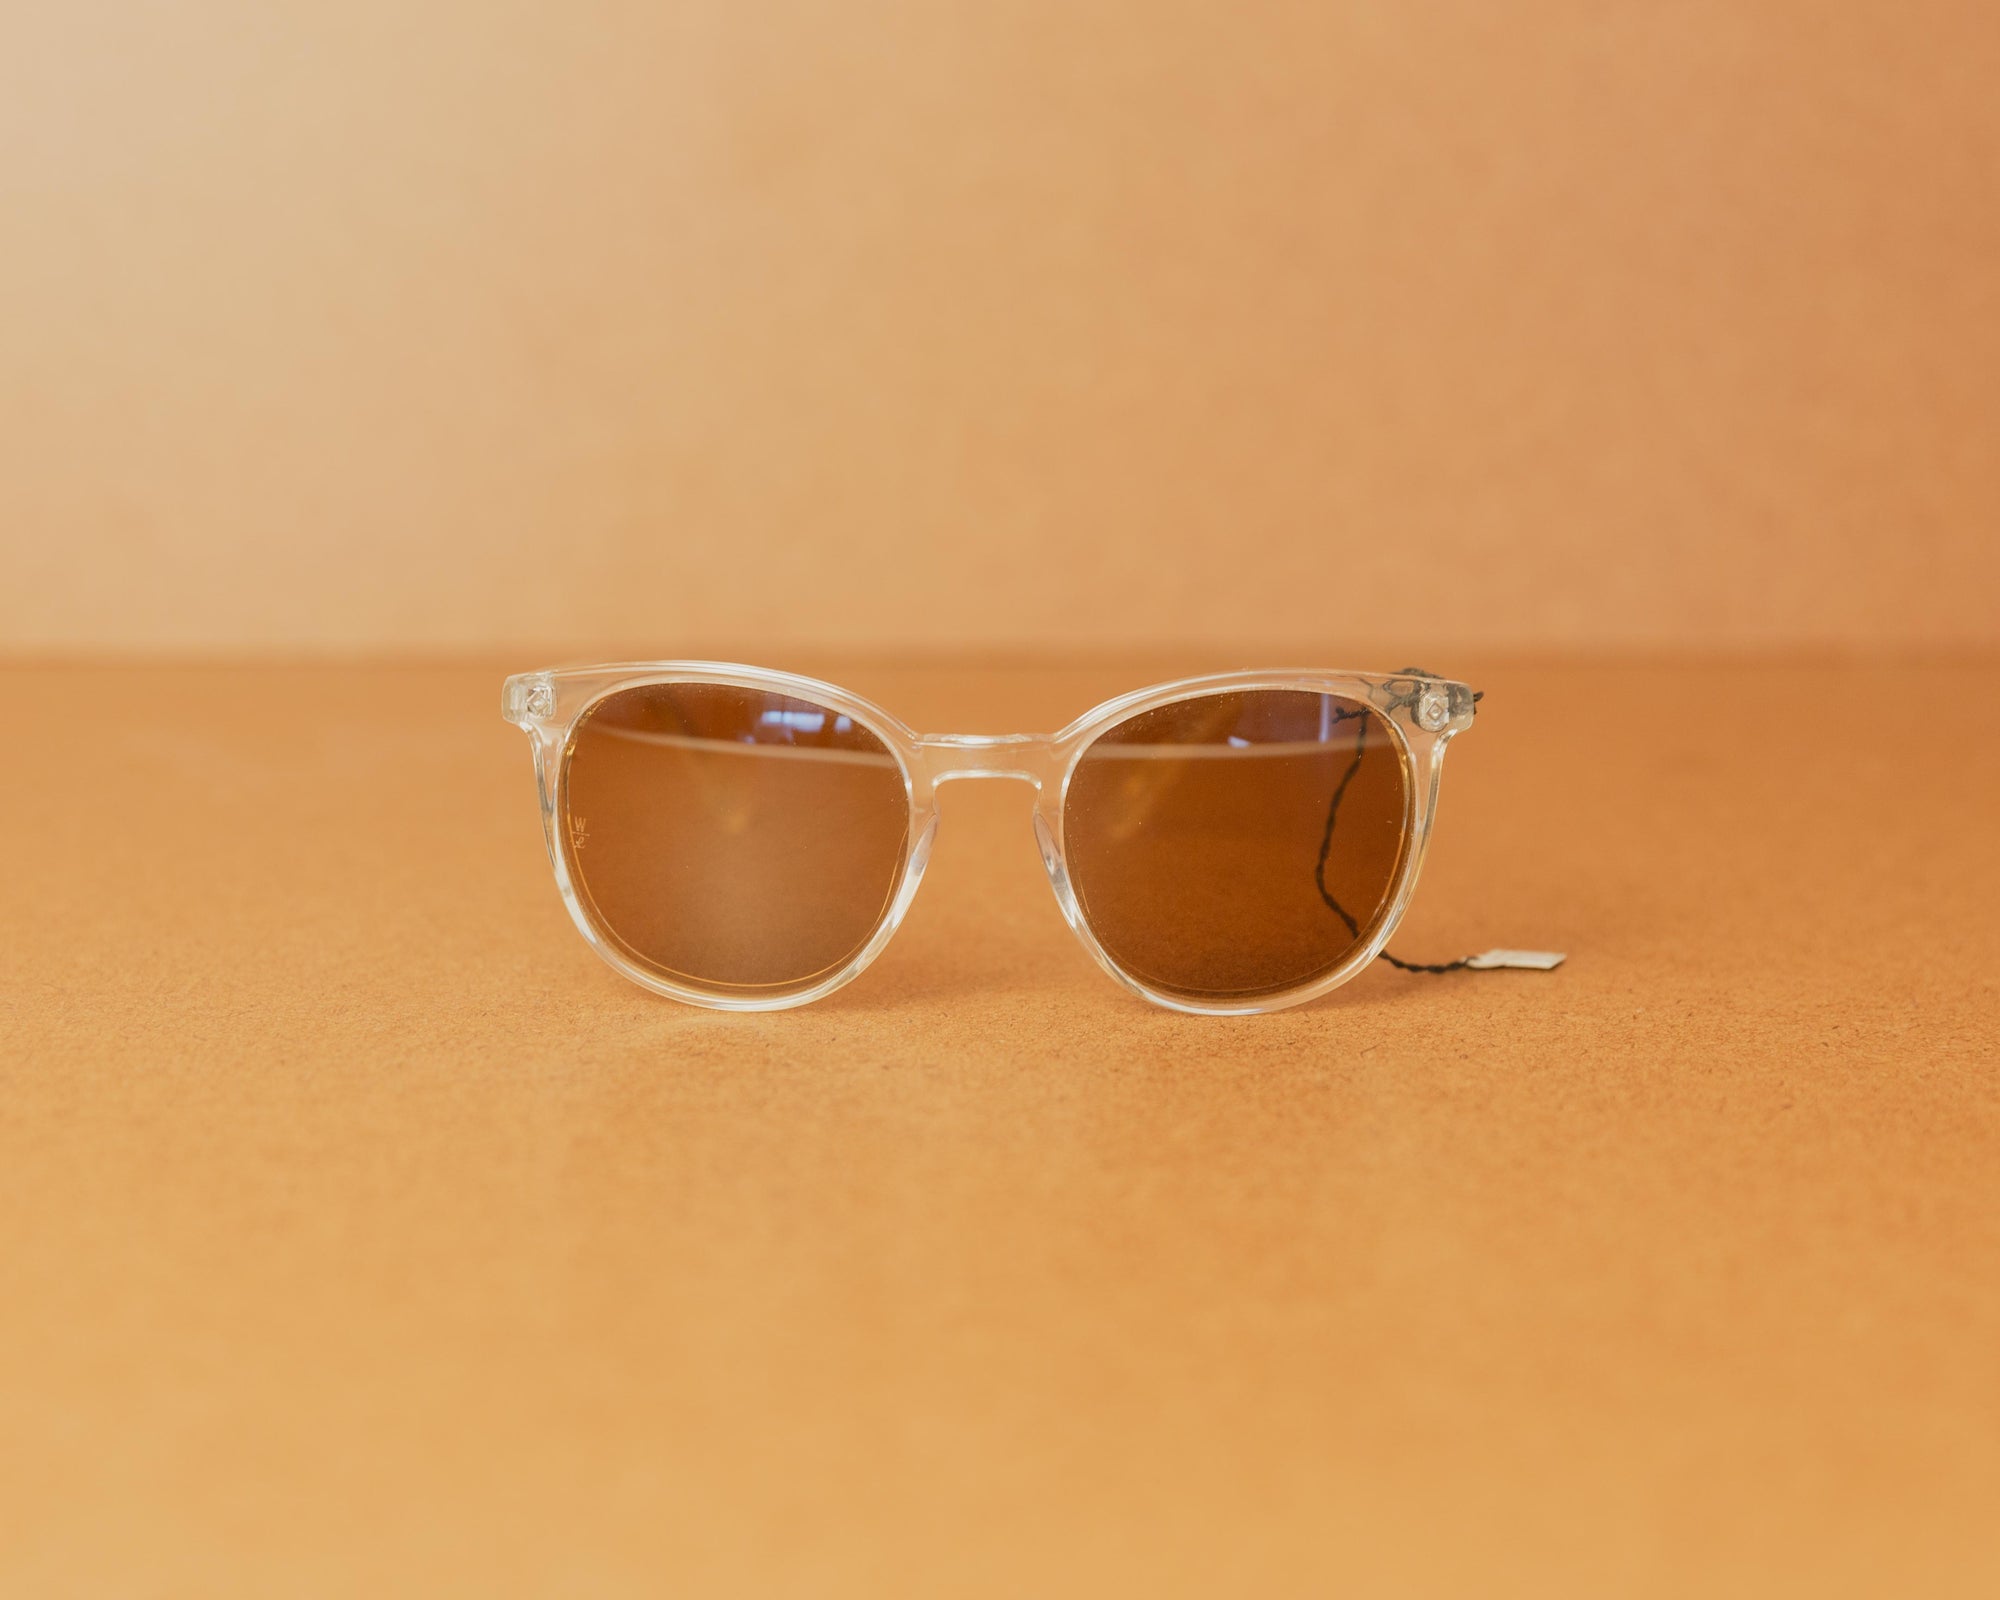 Wonderland Barstow Sunglasses in Clear Glass/Bronze